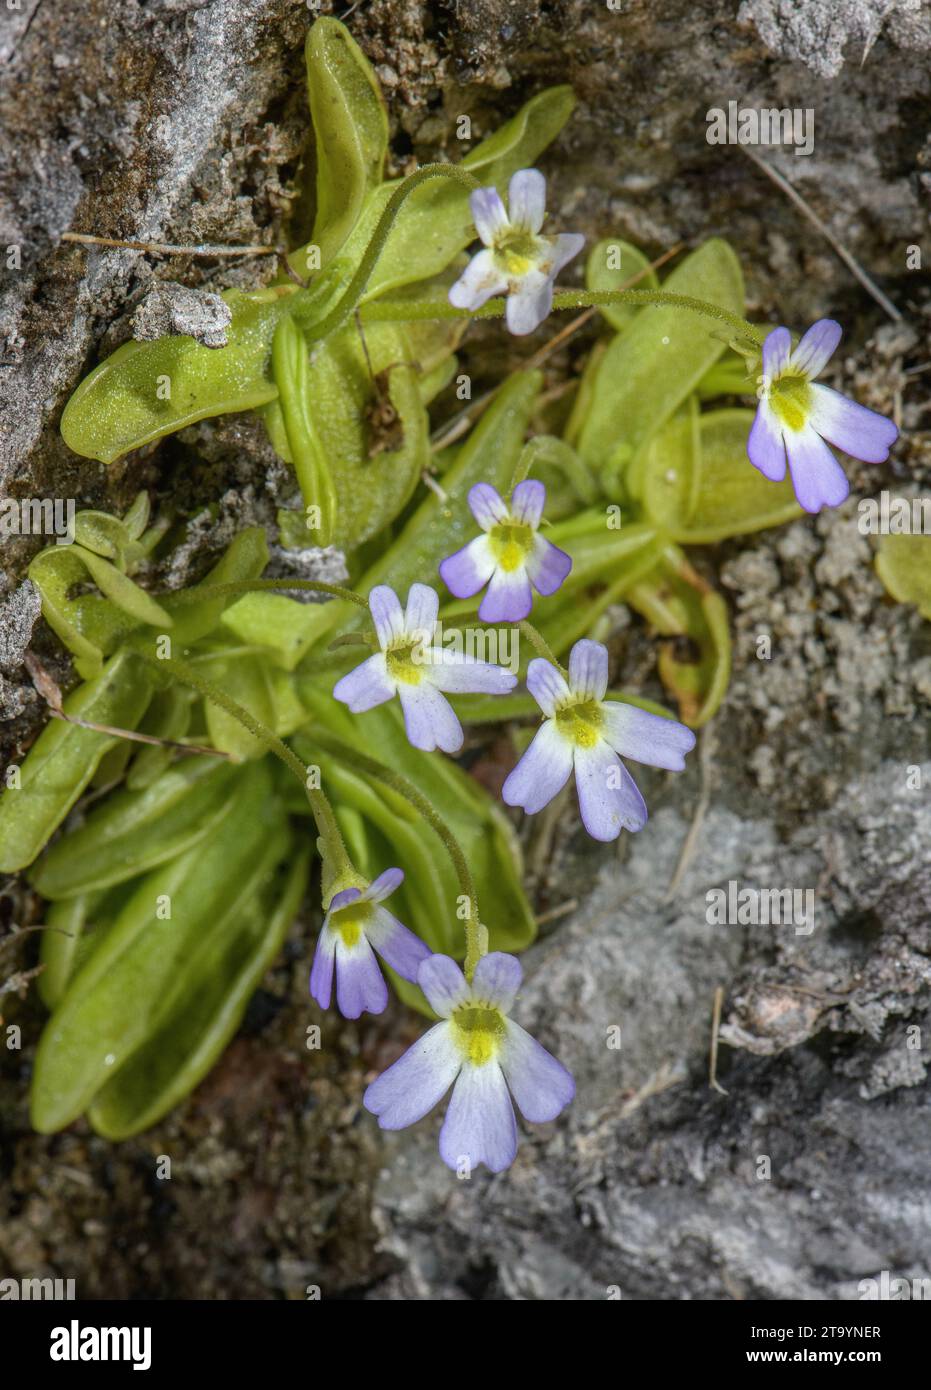 Butterwort, Pinguicula crystallina subsp. hirtiflora, on wet tufa in the Roya valley, Maritime Alps. Stock Photo